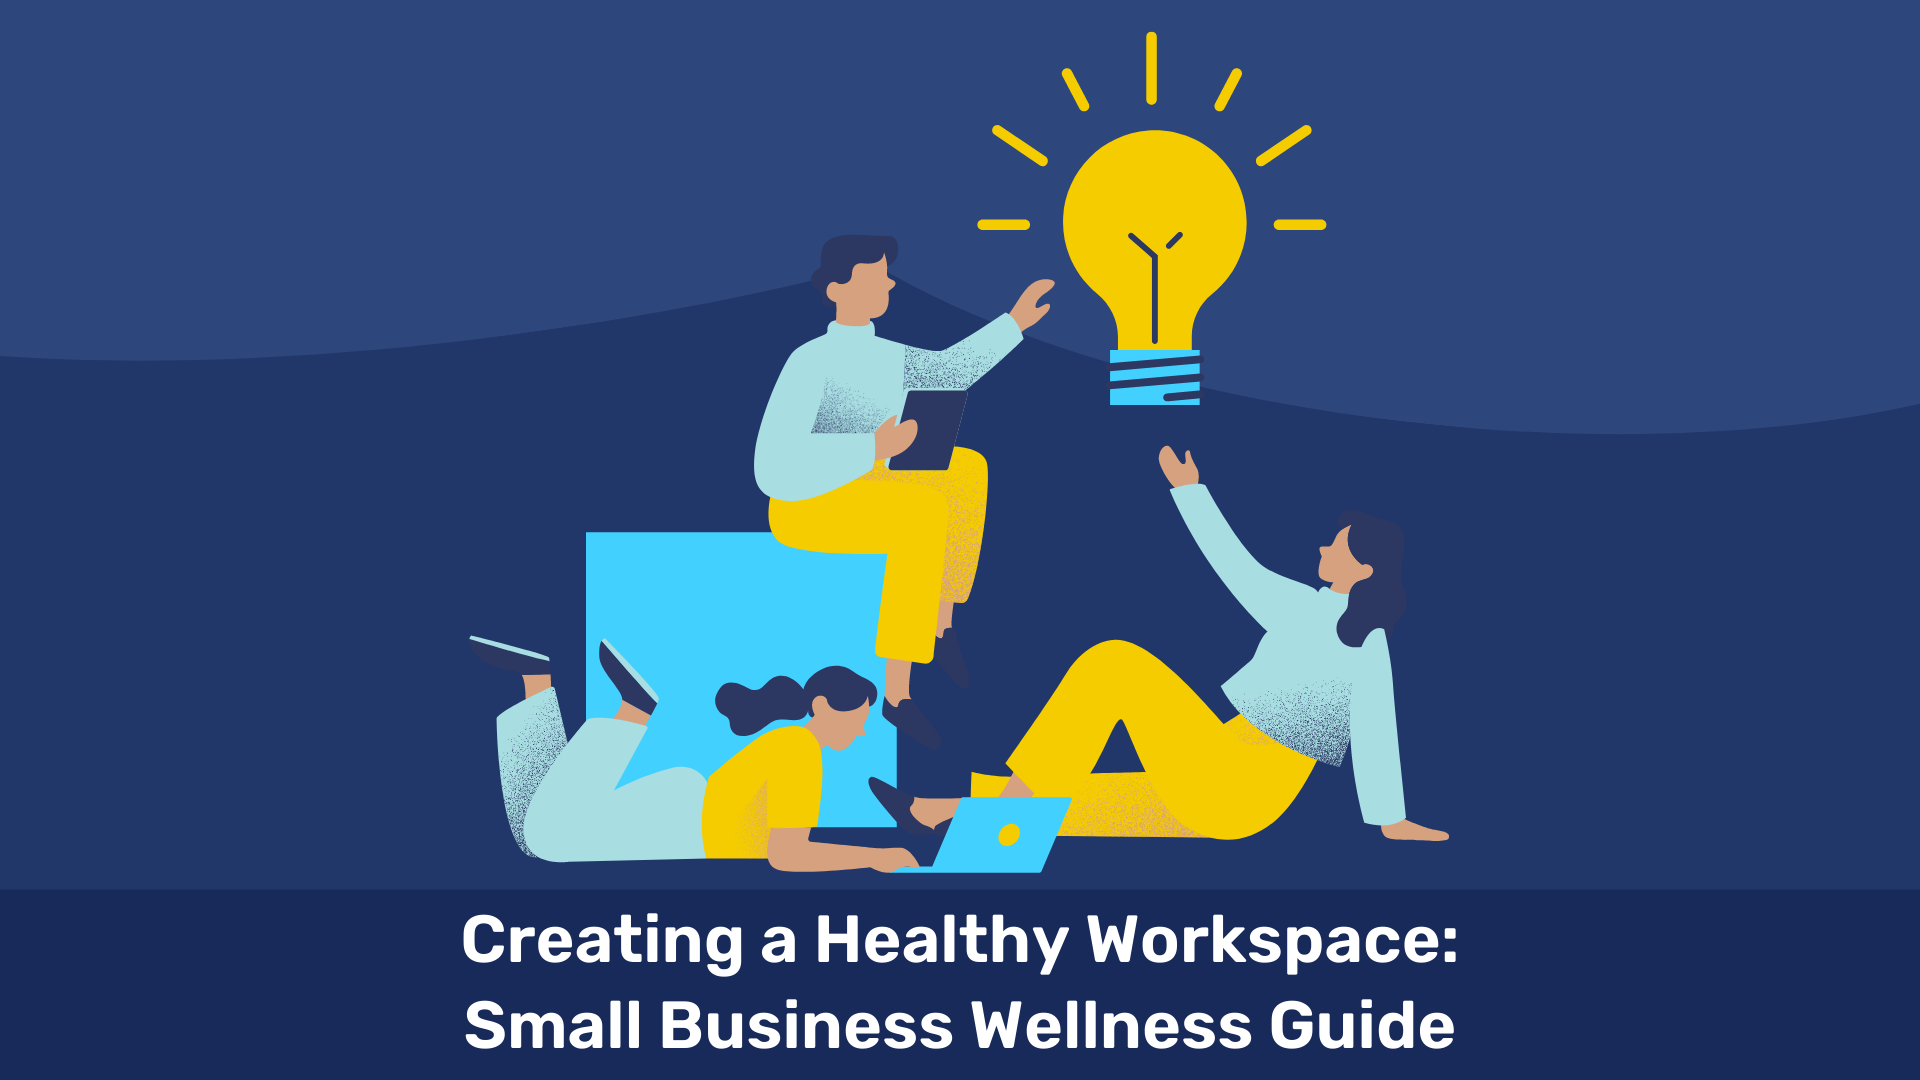 Small Business Wellness